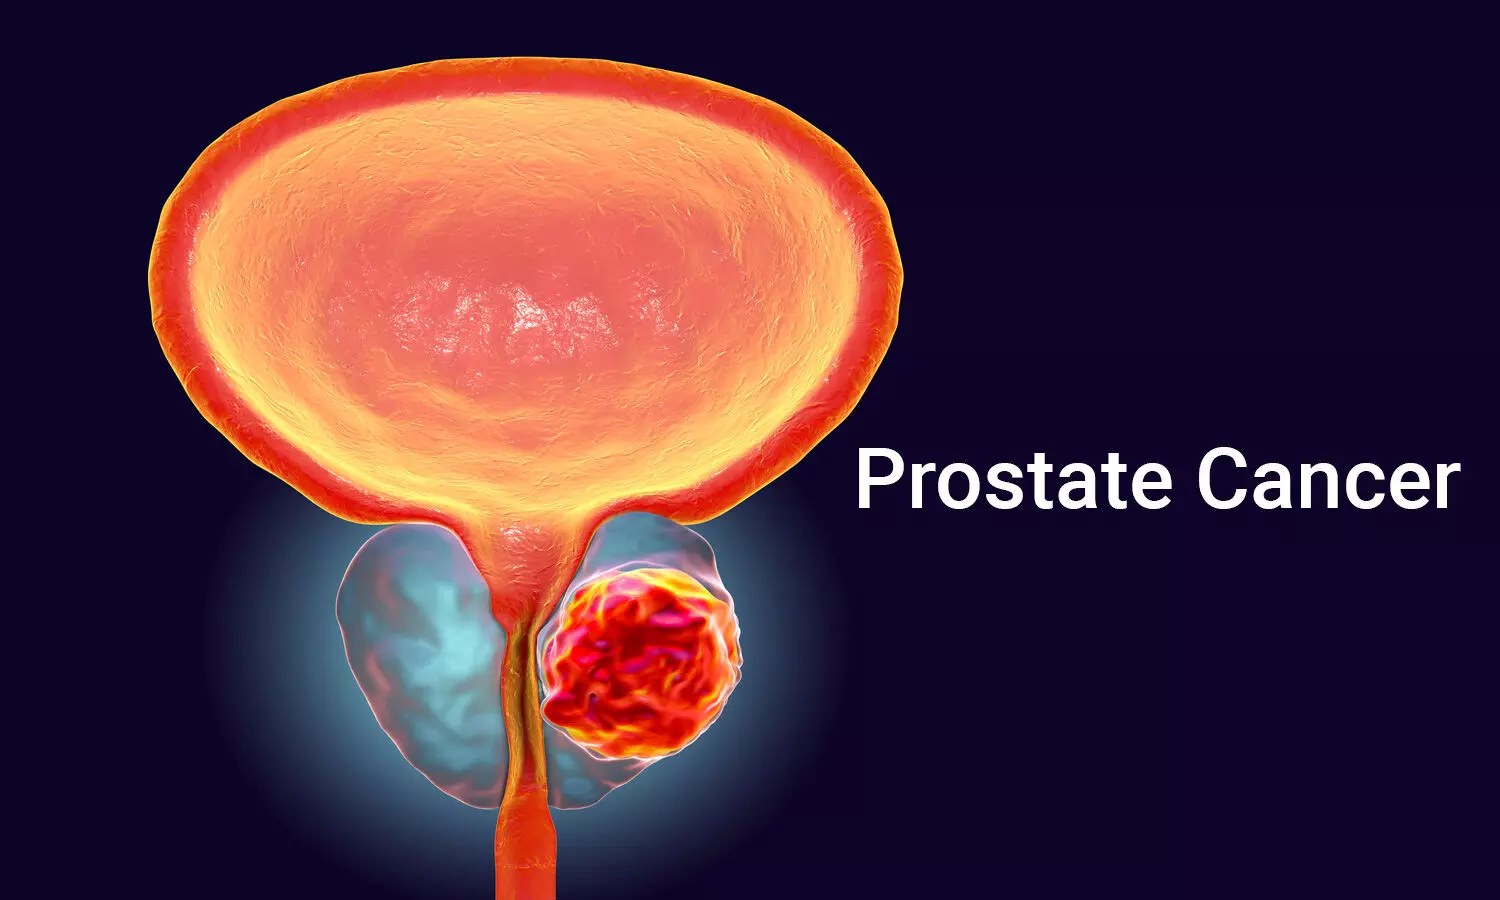 Novel imaging technique superior to conventional imaging in high risk prostate cancer: Lancet